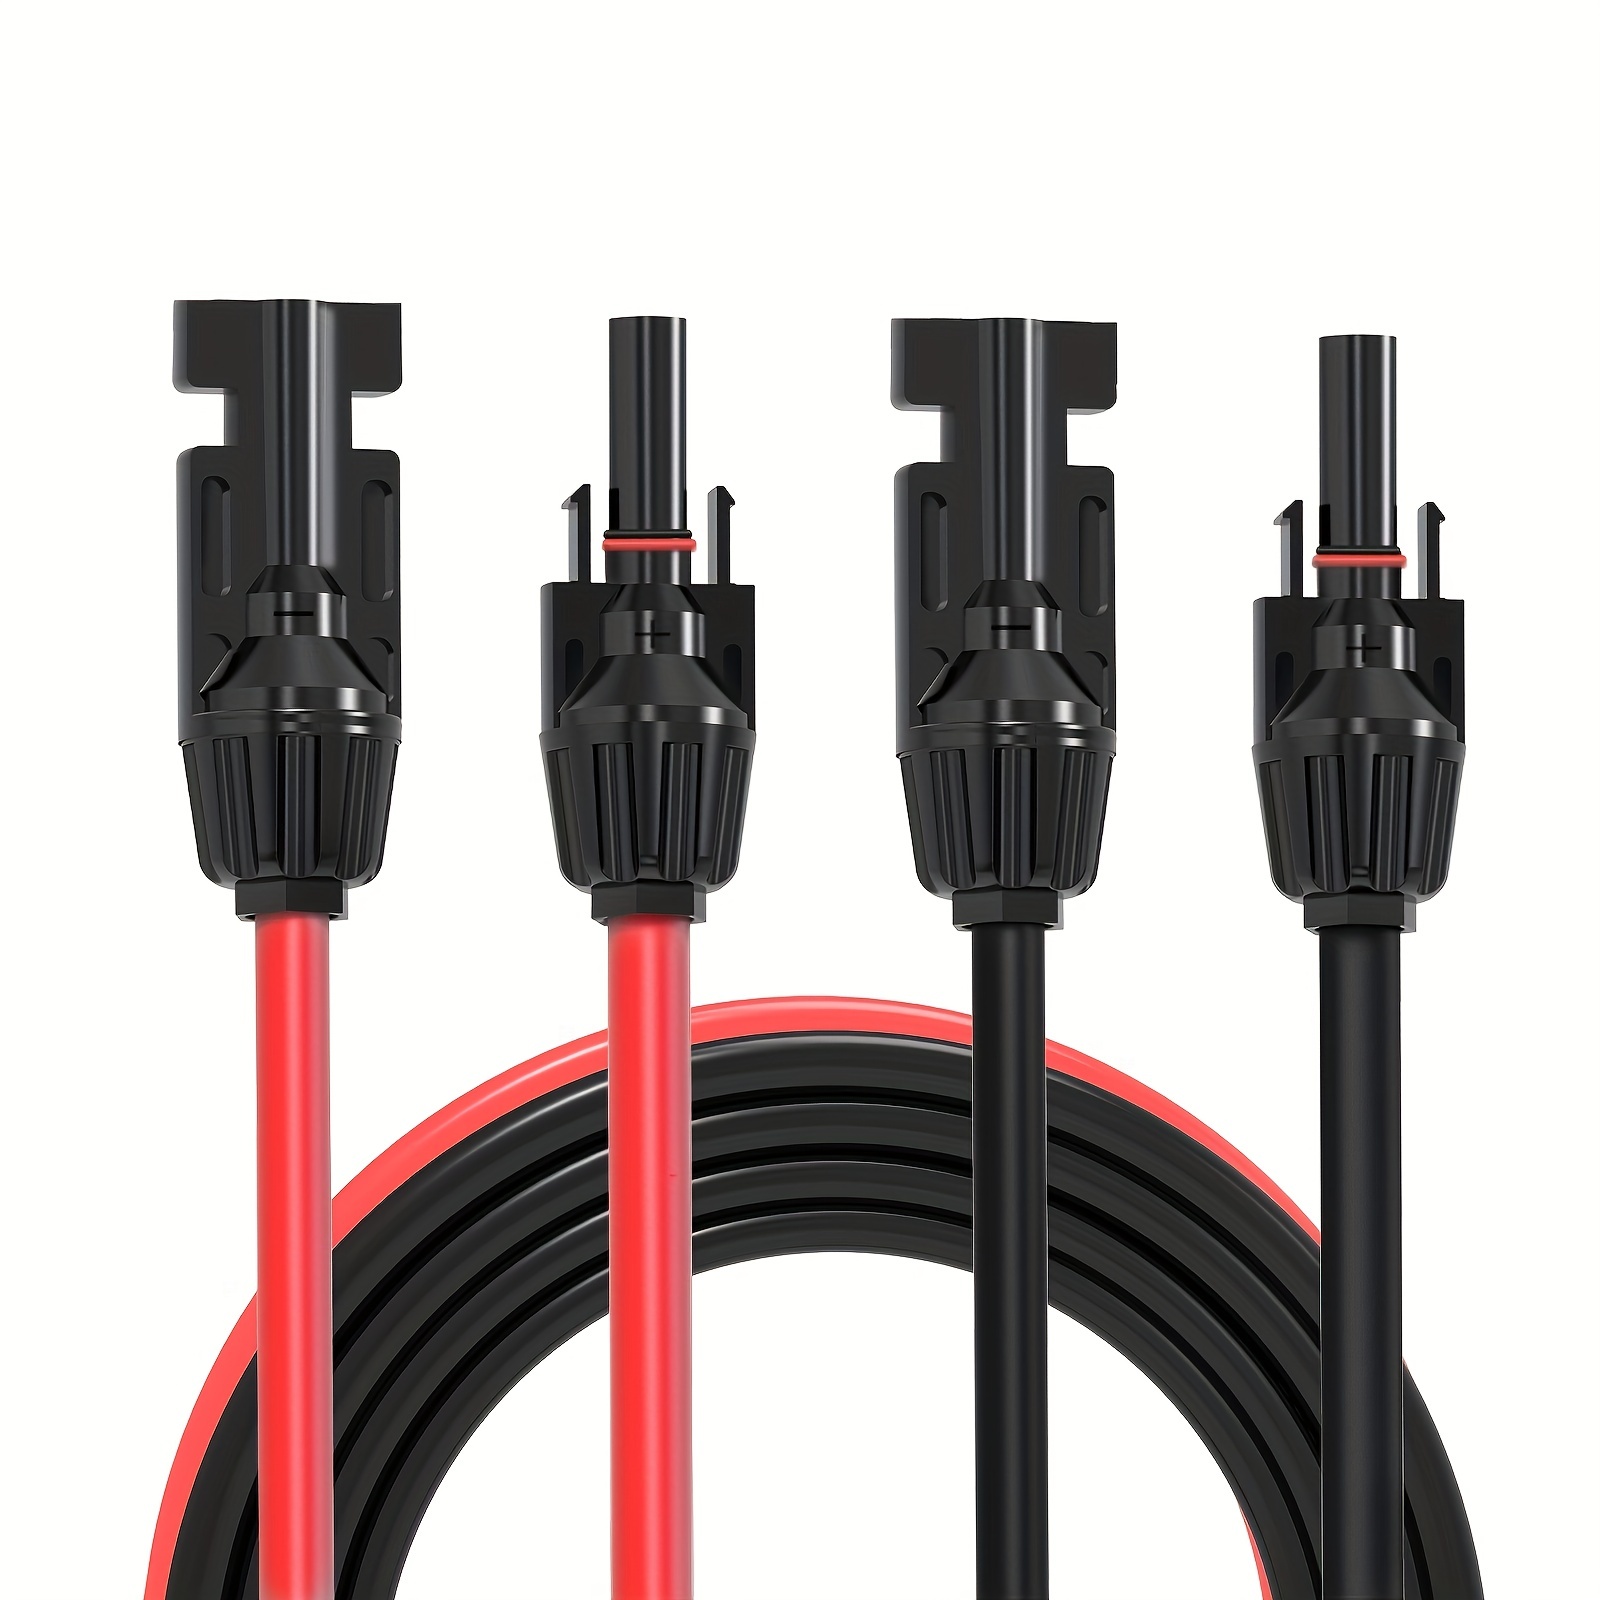 QILUCKY Cable de extensión solar de conexión profesional 10AWG 12AWG  rojo+negro, clase de voltaje de 4 mm6 mm, 1500 V. Enchufe solar montado  macho y – Yaxa Colombia